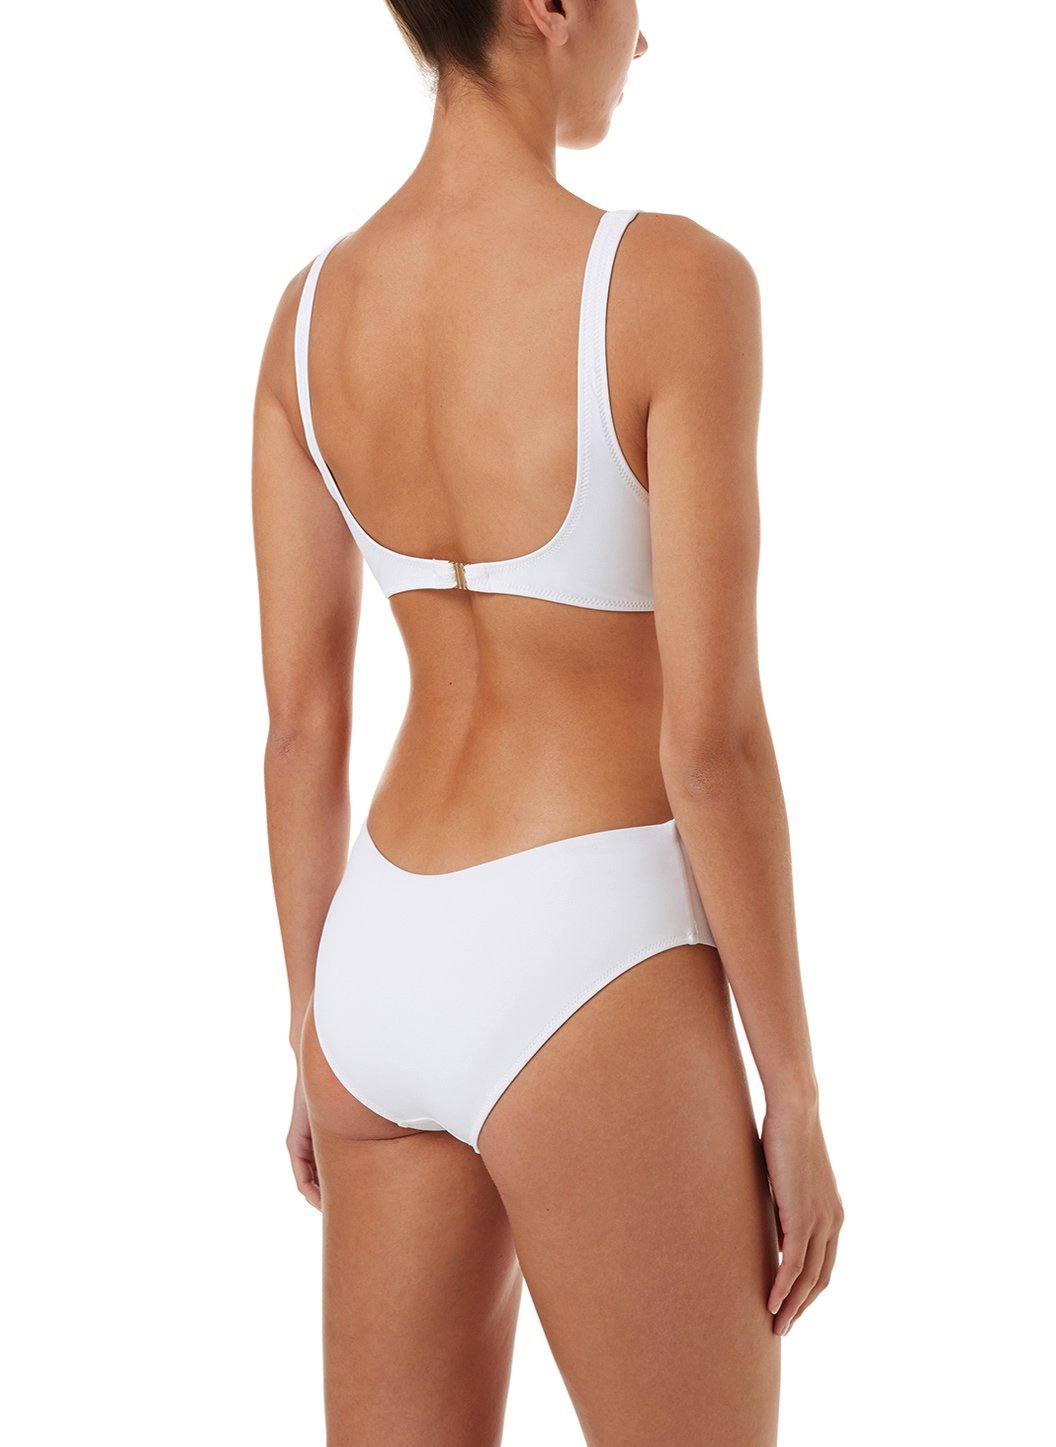 delmar white overtheshoulder vneck cutout onepiece swimsuit 2019 B